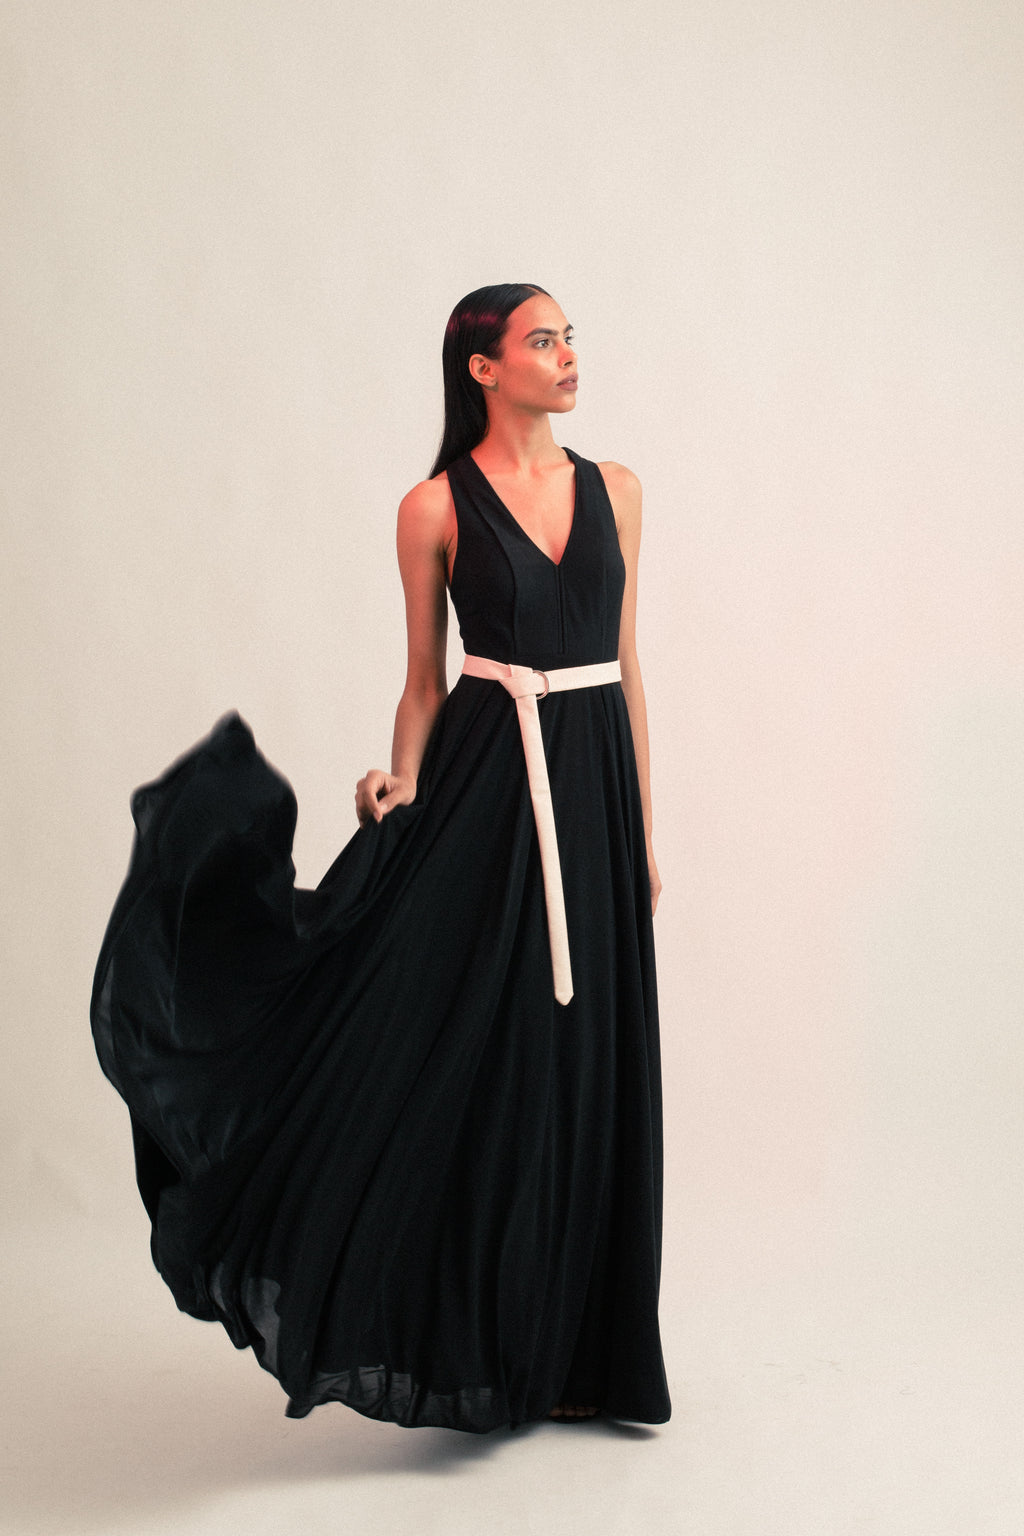 The Black Out Dress - Bhaavya Bhatnagar